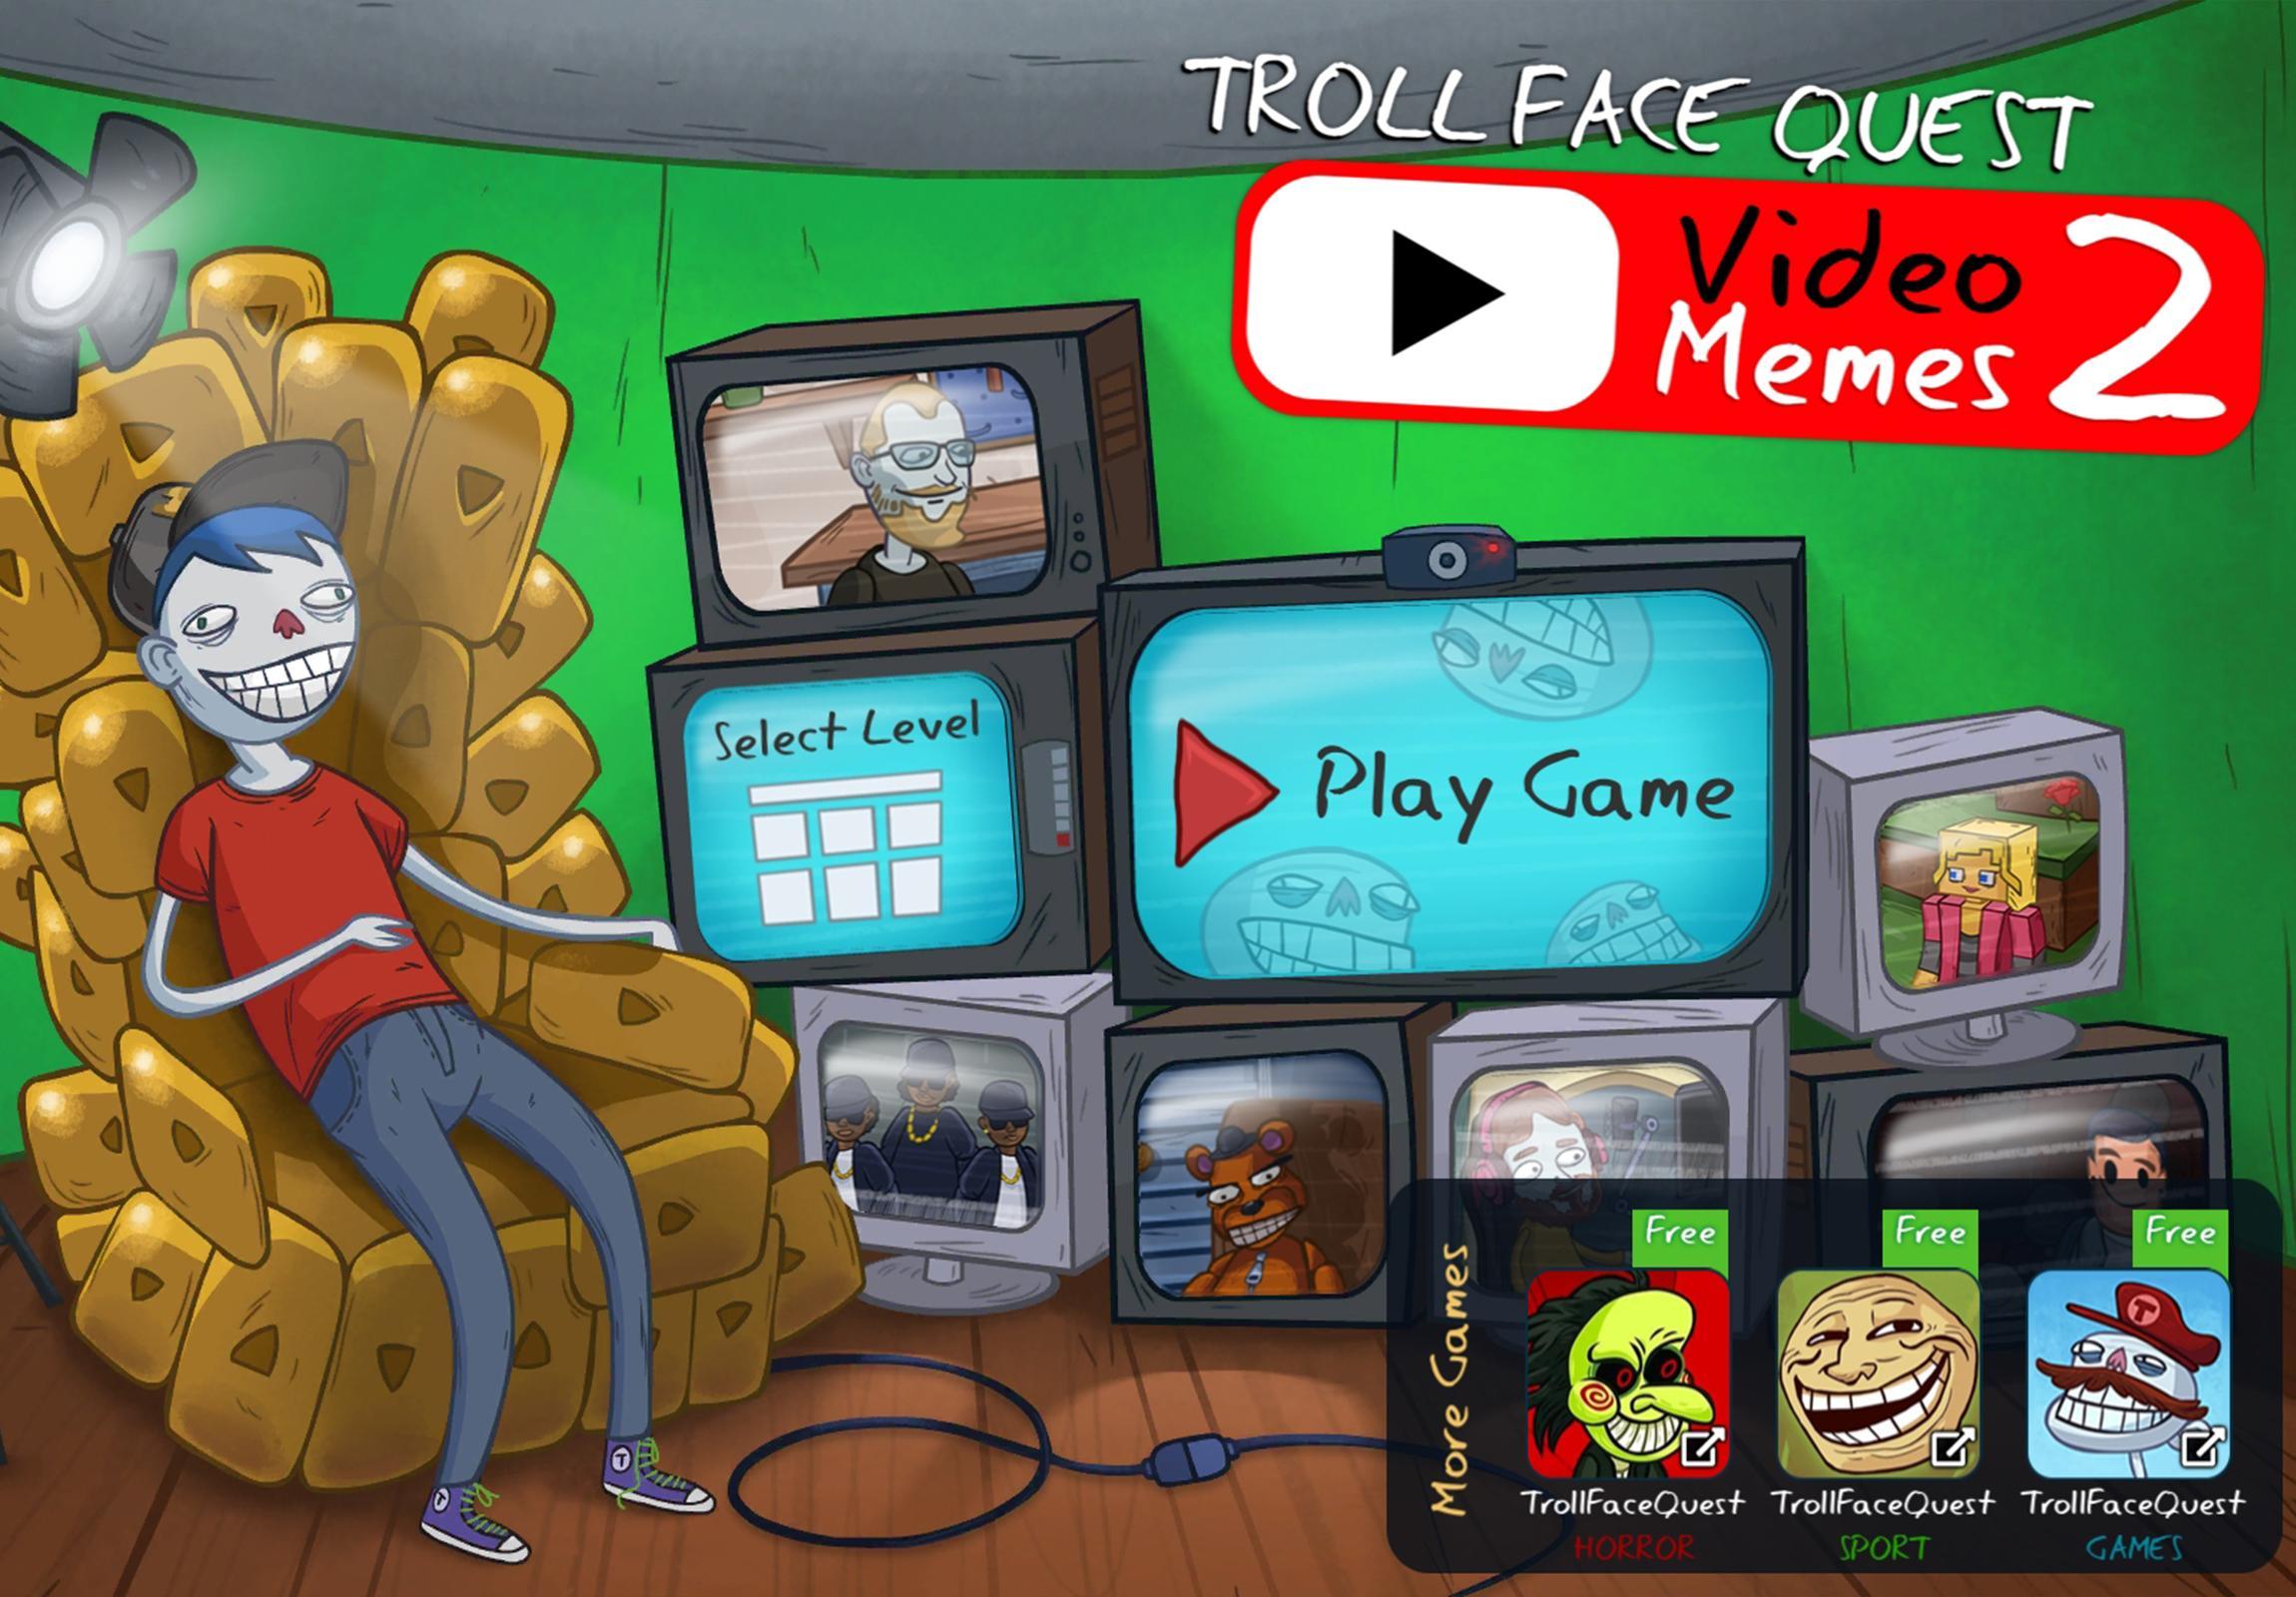 Trollface video memes. Тролль квест. Троллфейс игра. Troll Quest Video games. Тролль фейс квест.